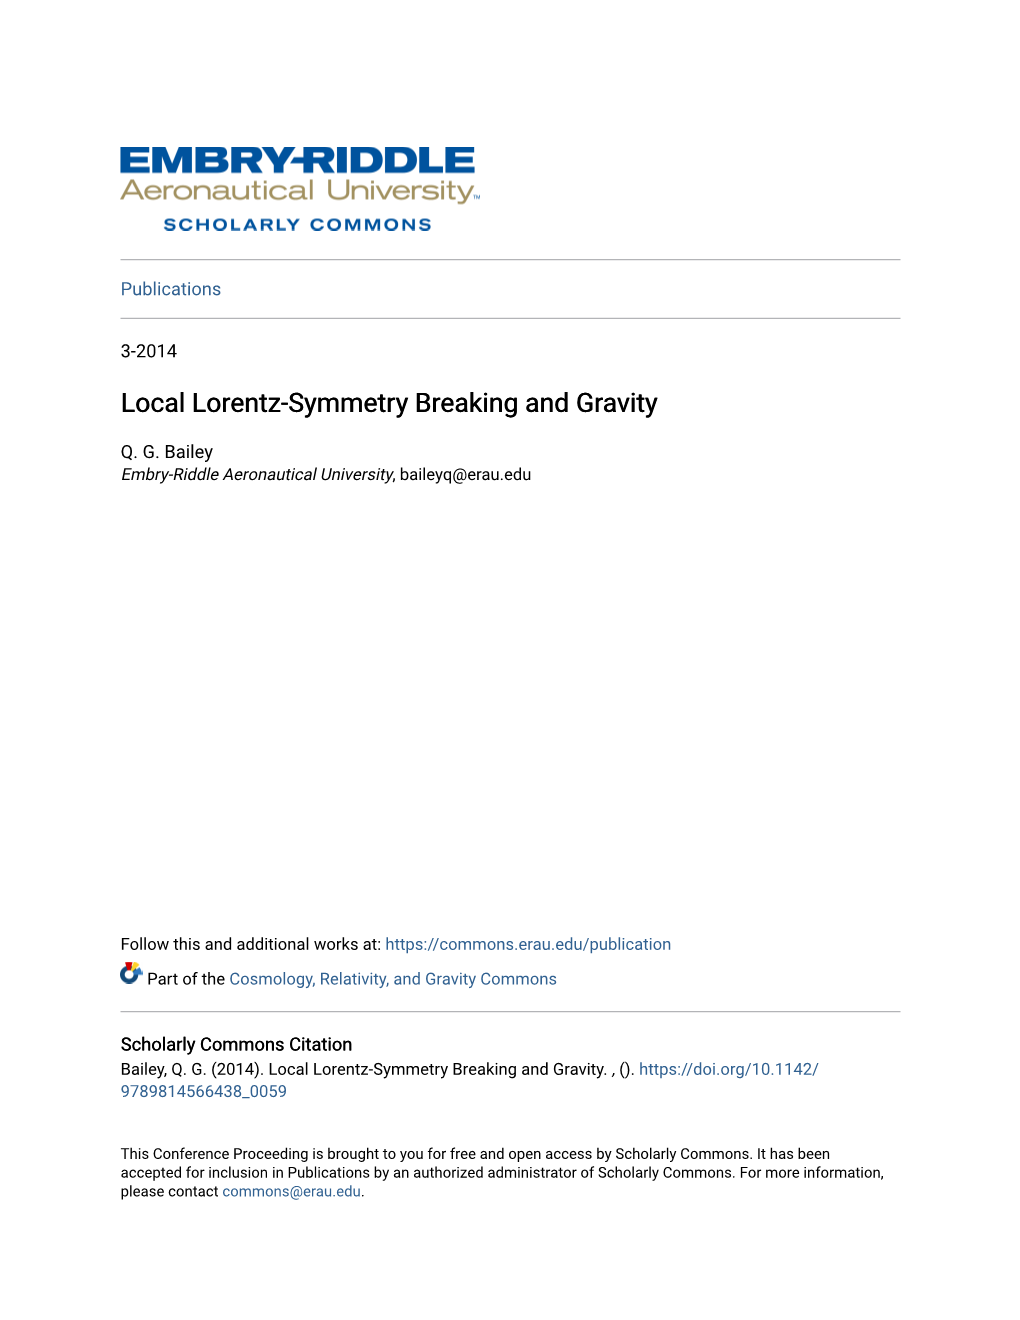 Local Lorentz-Symmetry Breaking and Gravity